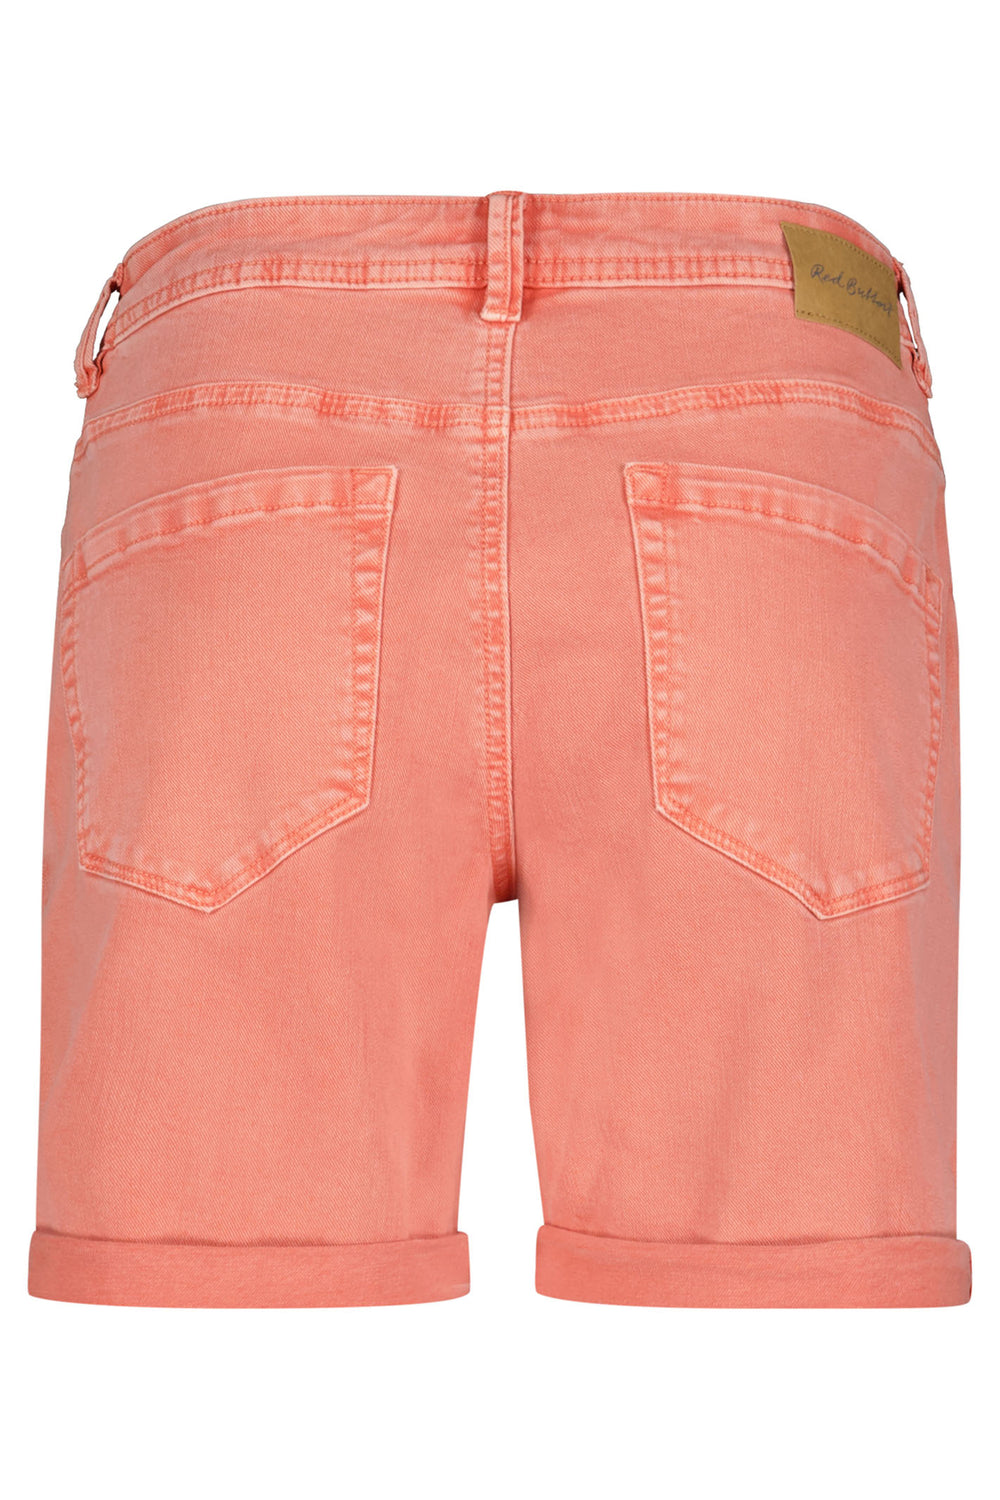 Red Button SRB4229 Bibette Flamingo Pink Denim Shorts - Dotique